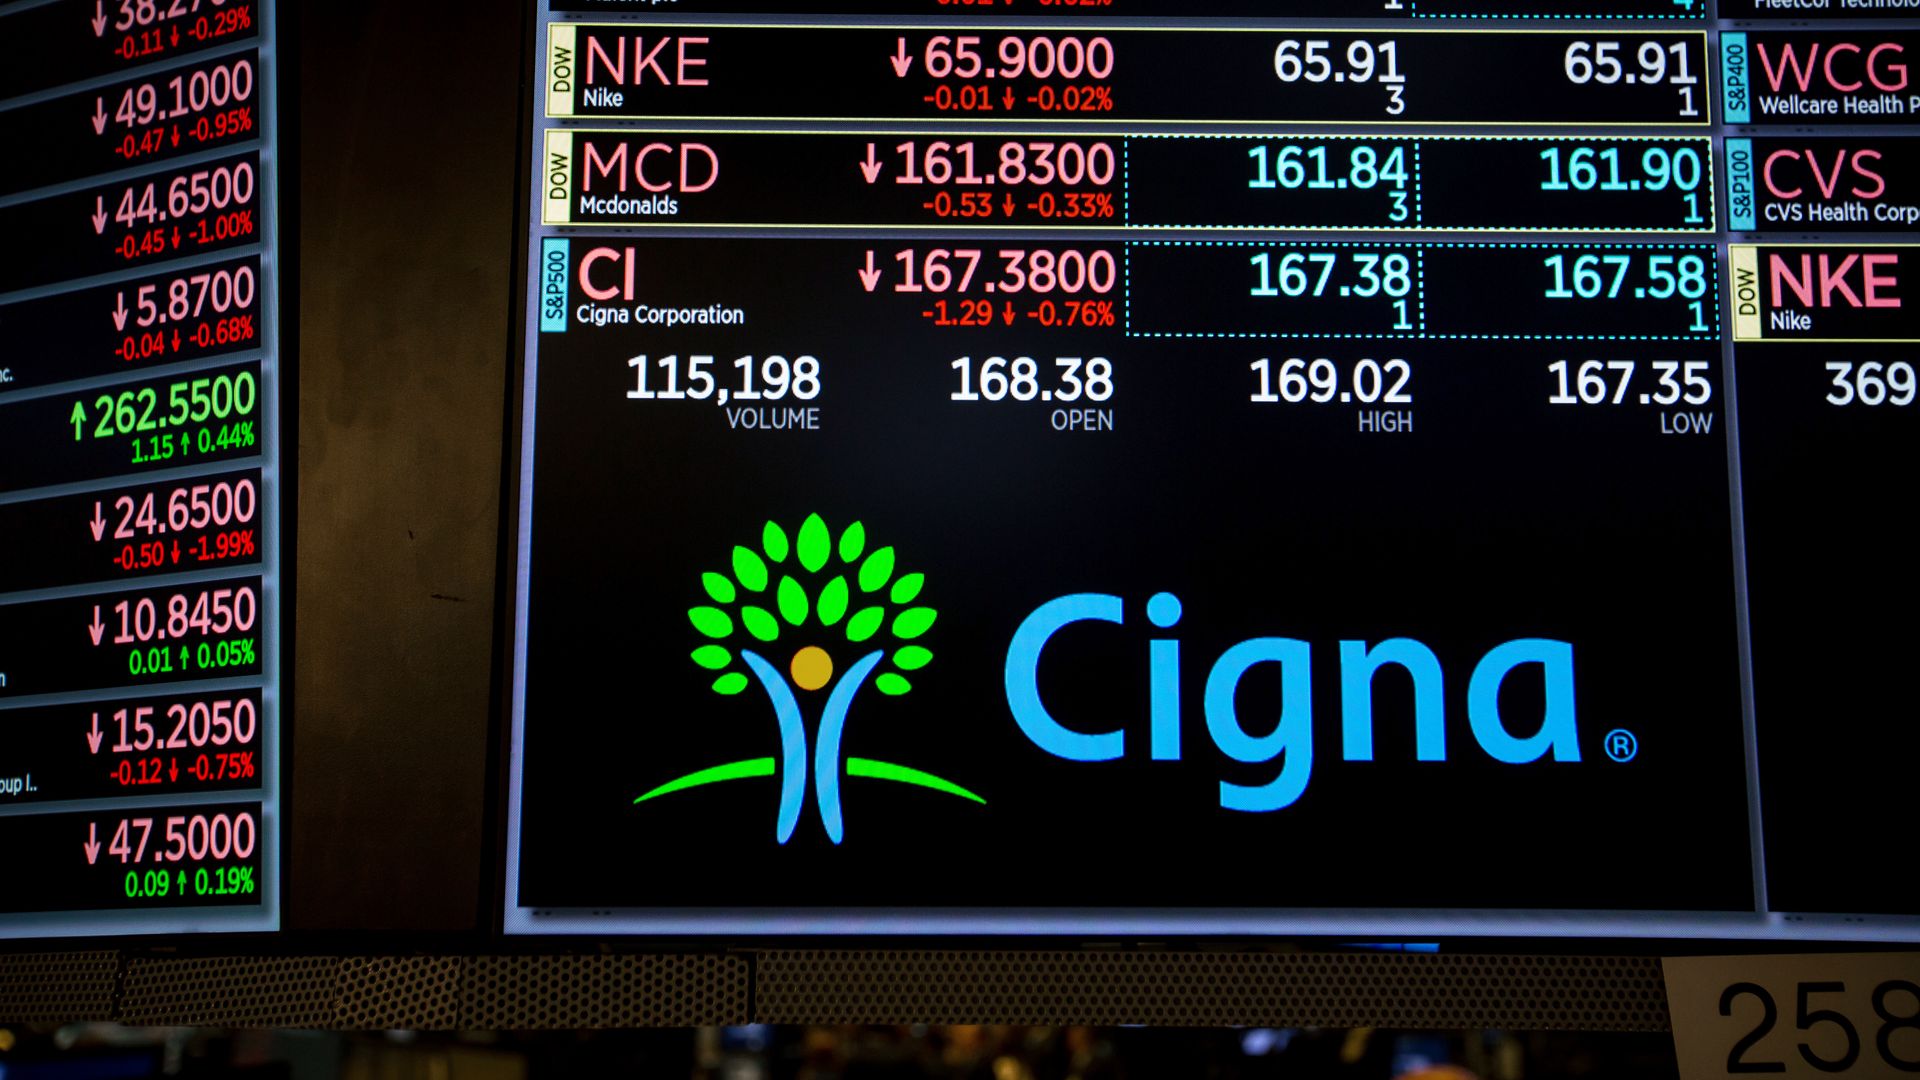 Cigna's blue and green tree logo/name on a Wall Street ticker board.